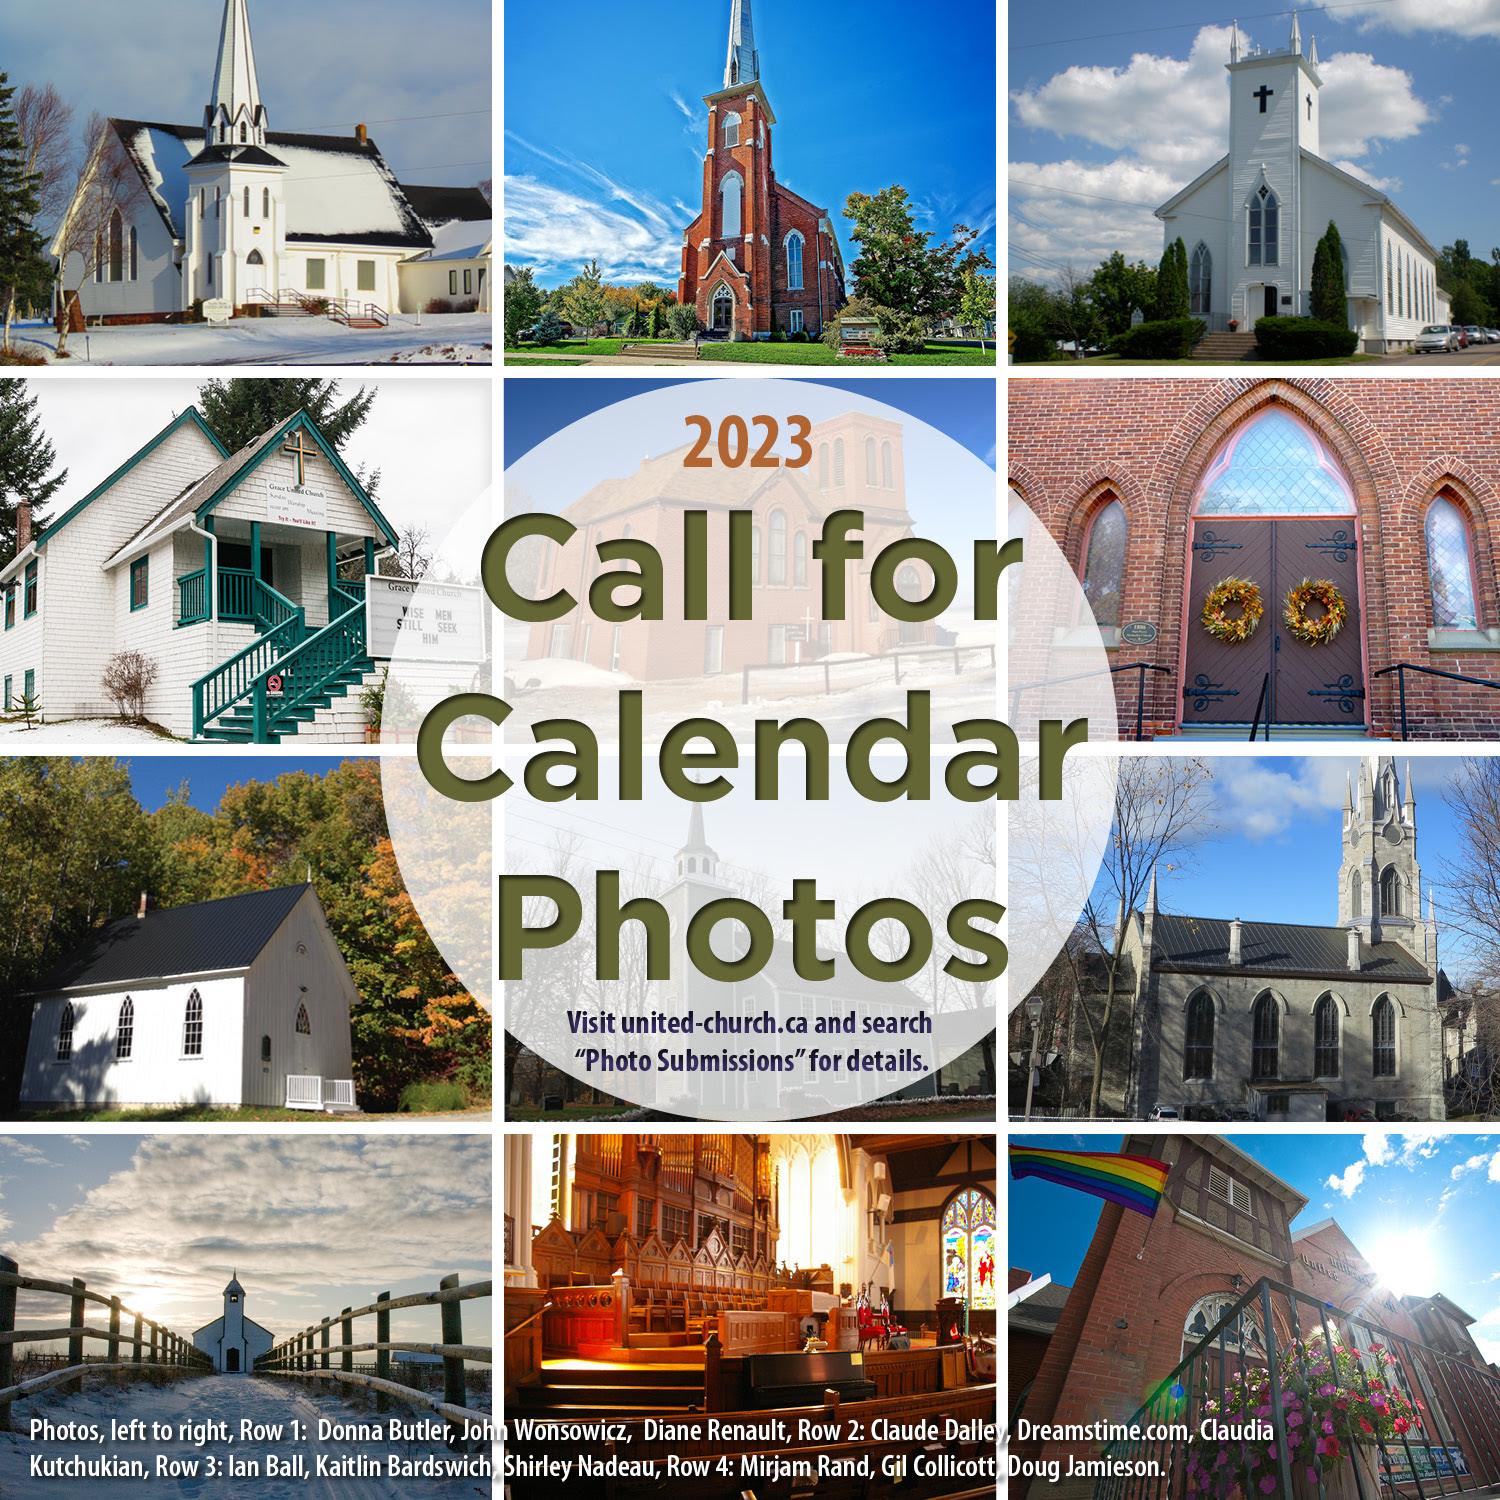 Call for Calendar Photos